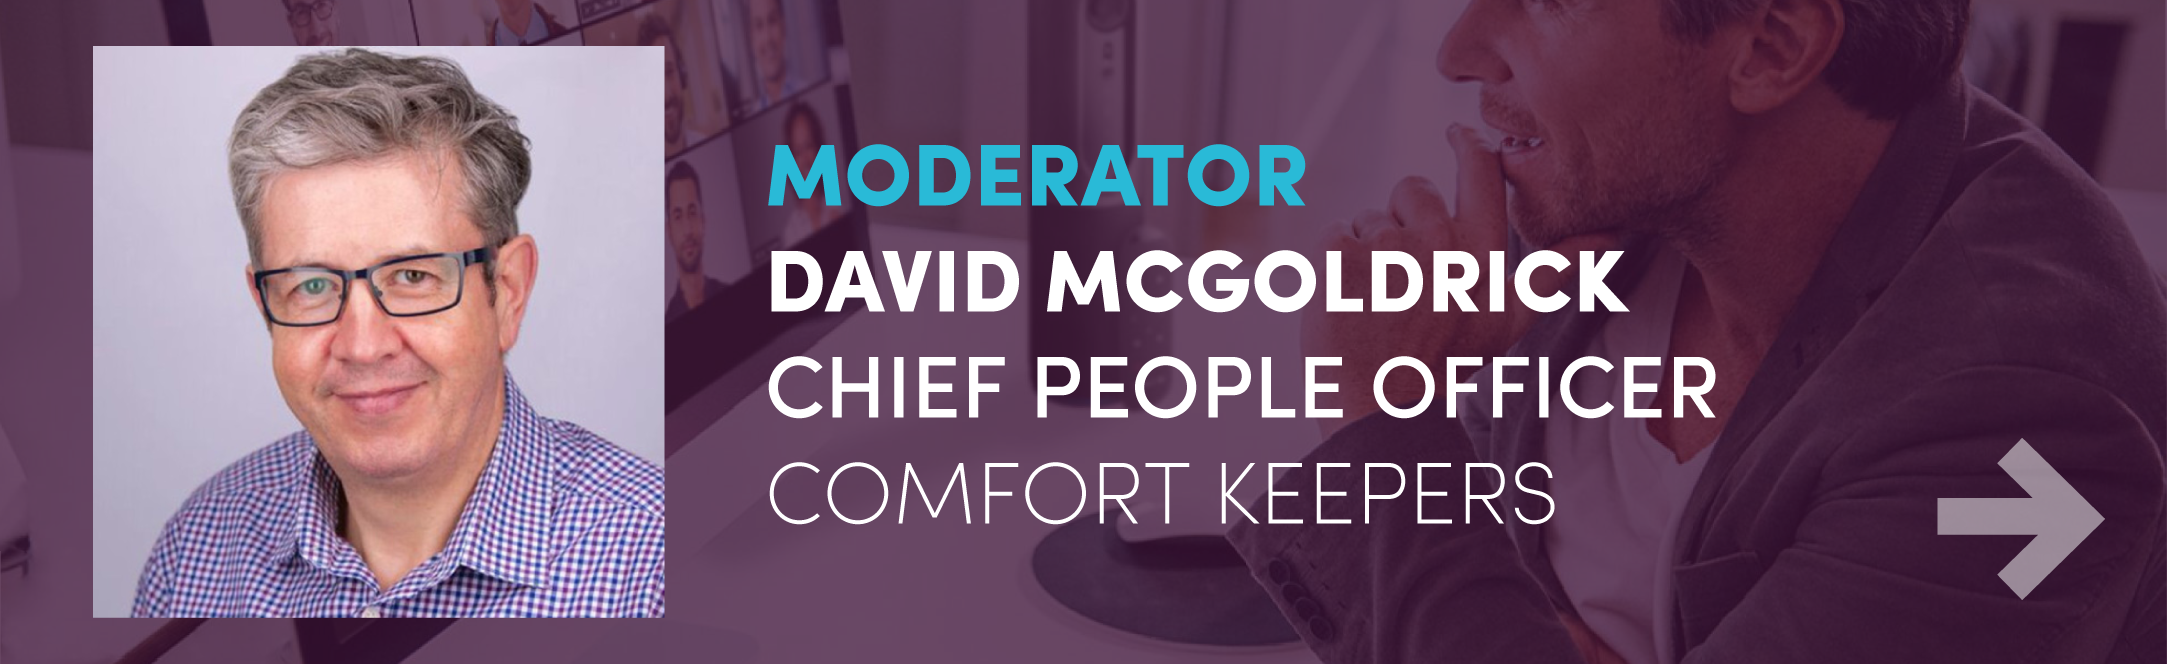 modrator david mcgoldrick chief people officer